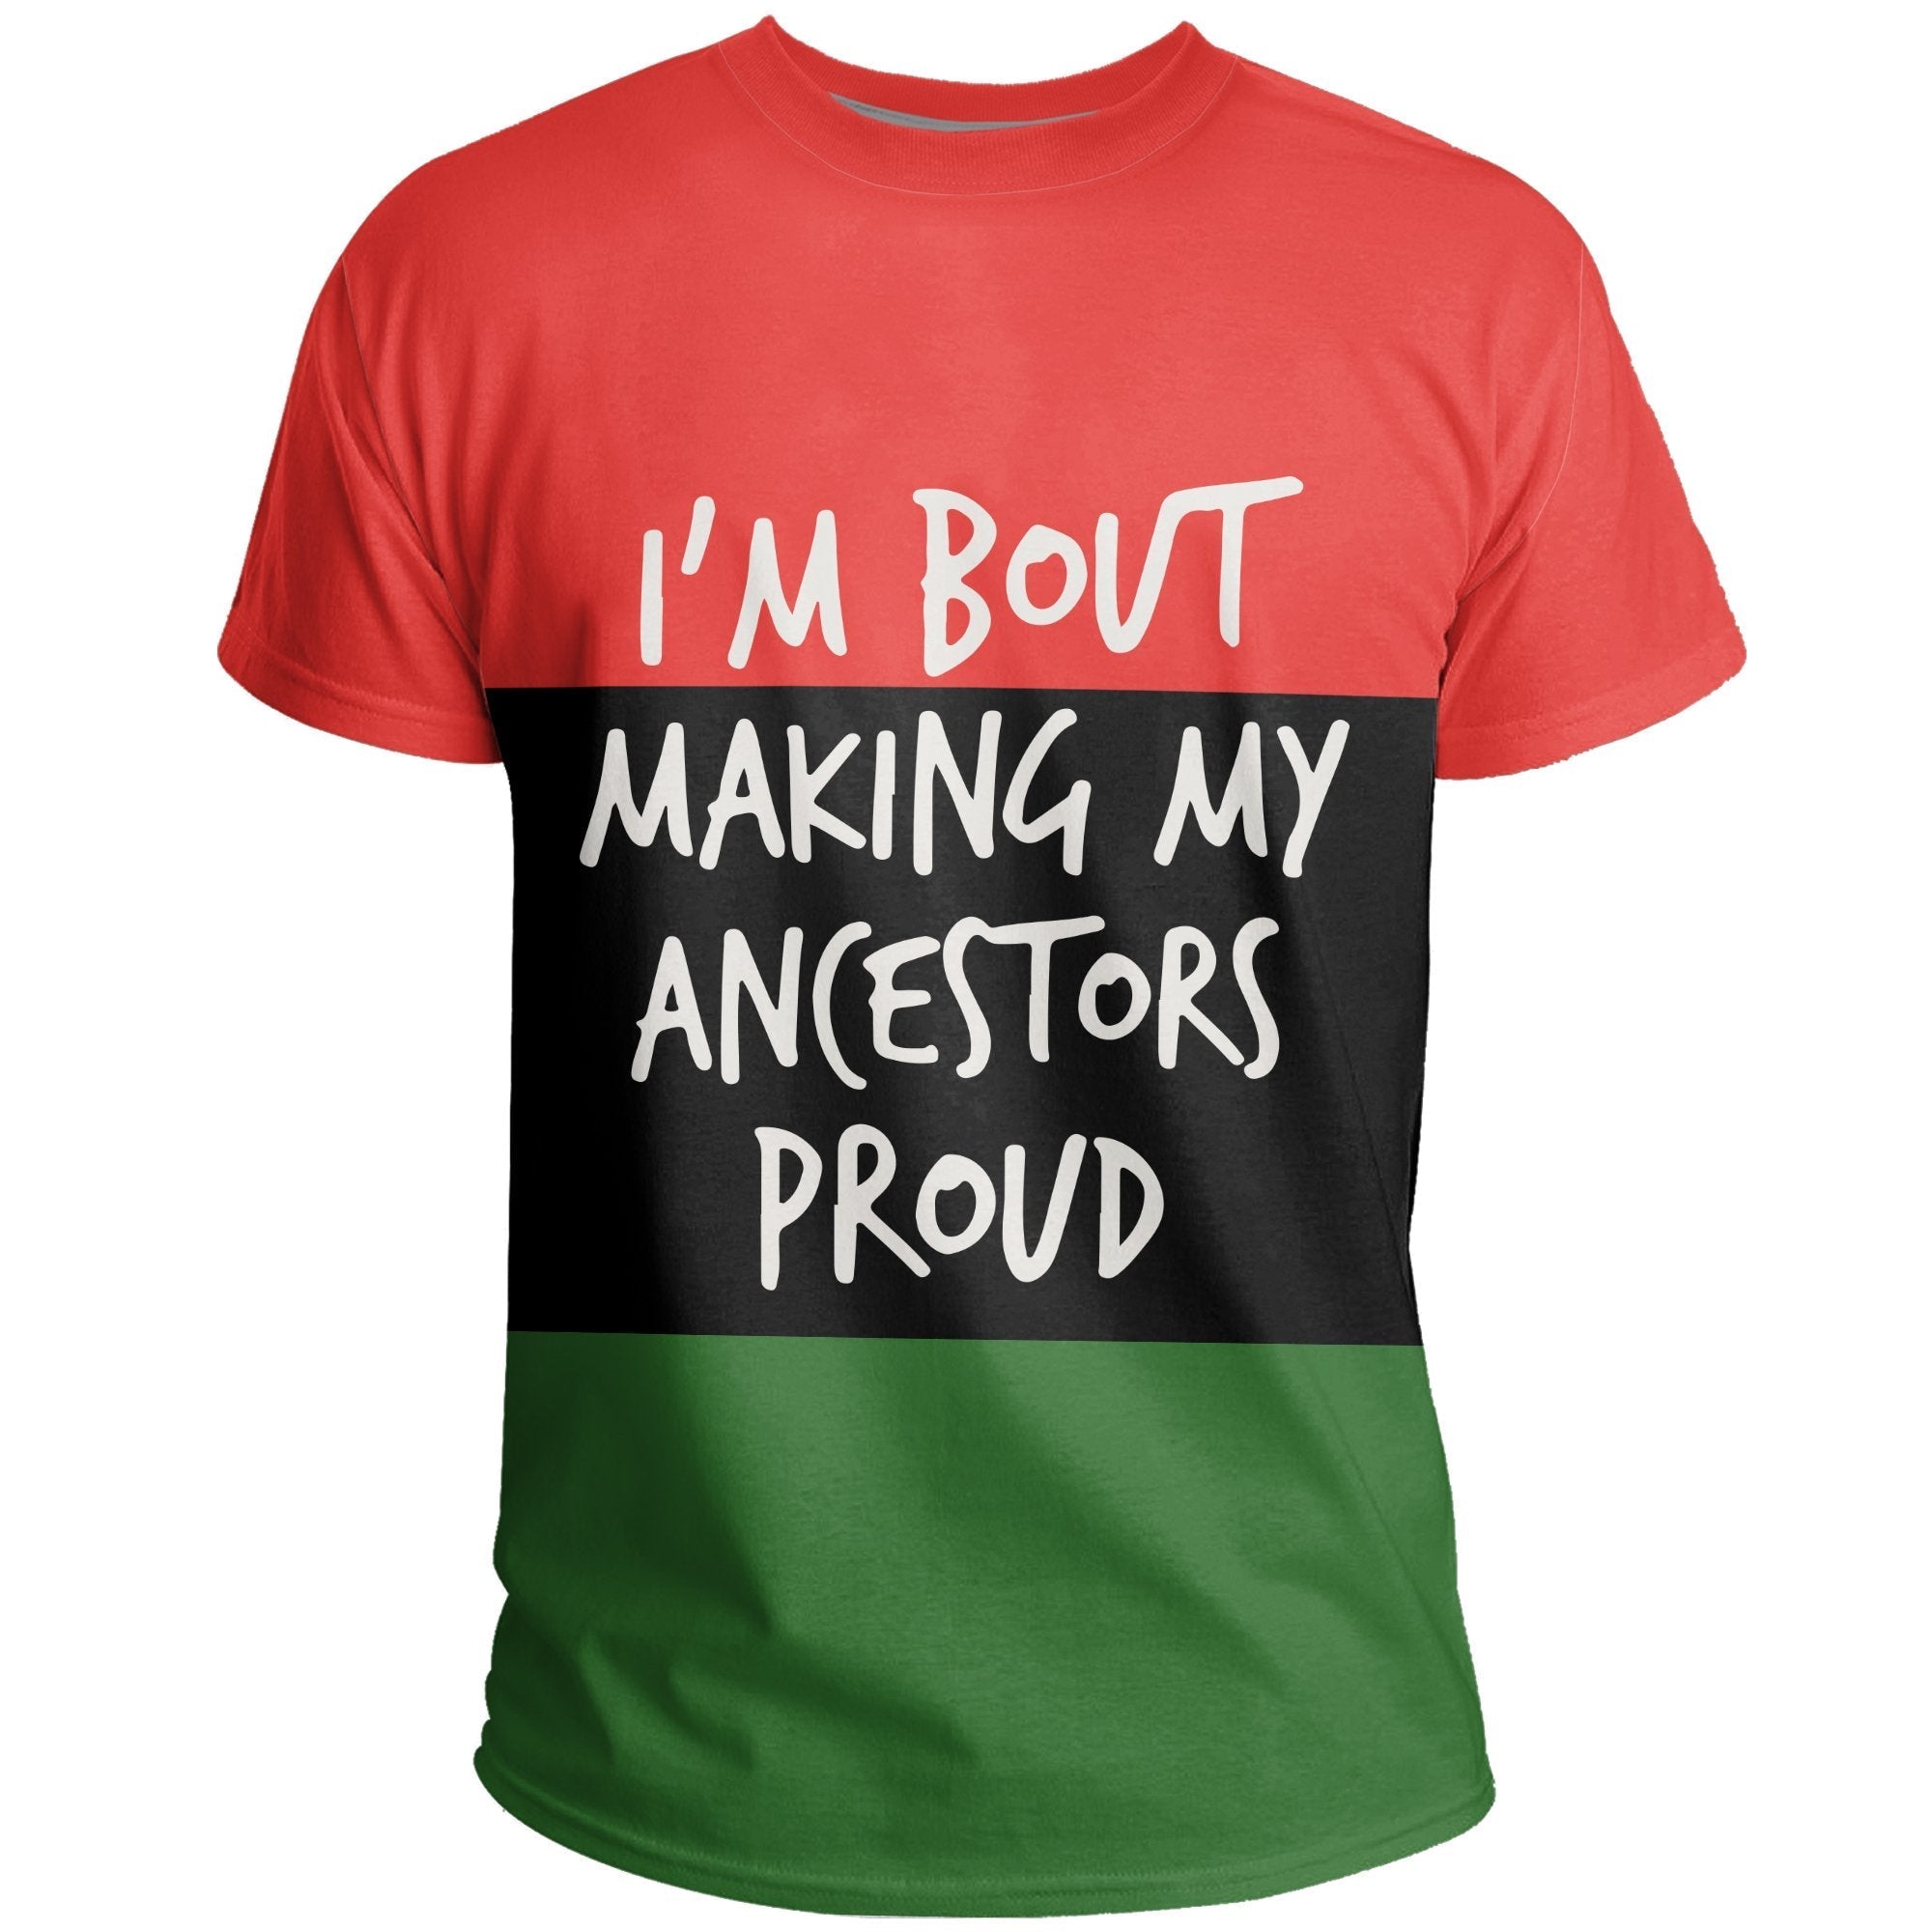 wonder-print-shop-t-shirt-im-bout-making-my-ancestor-proud-tee